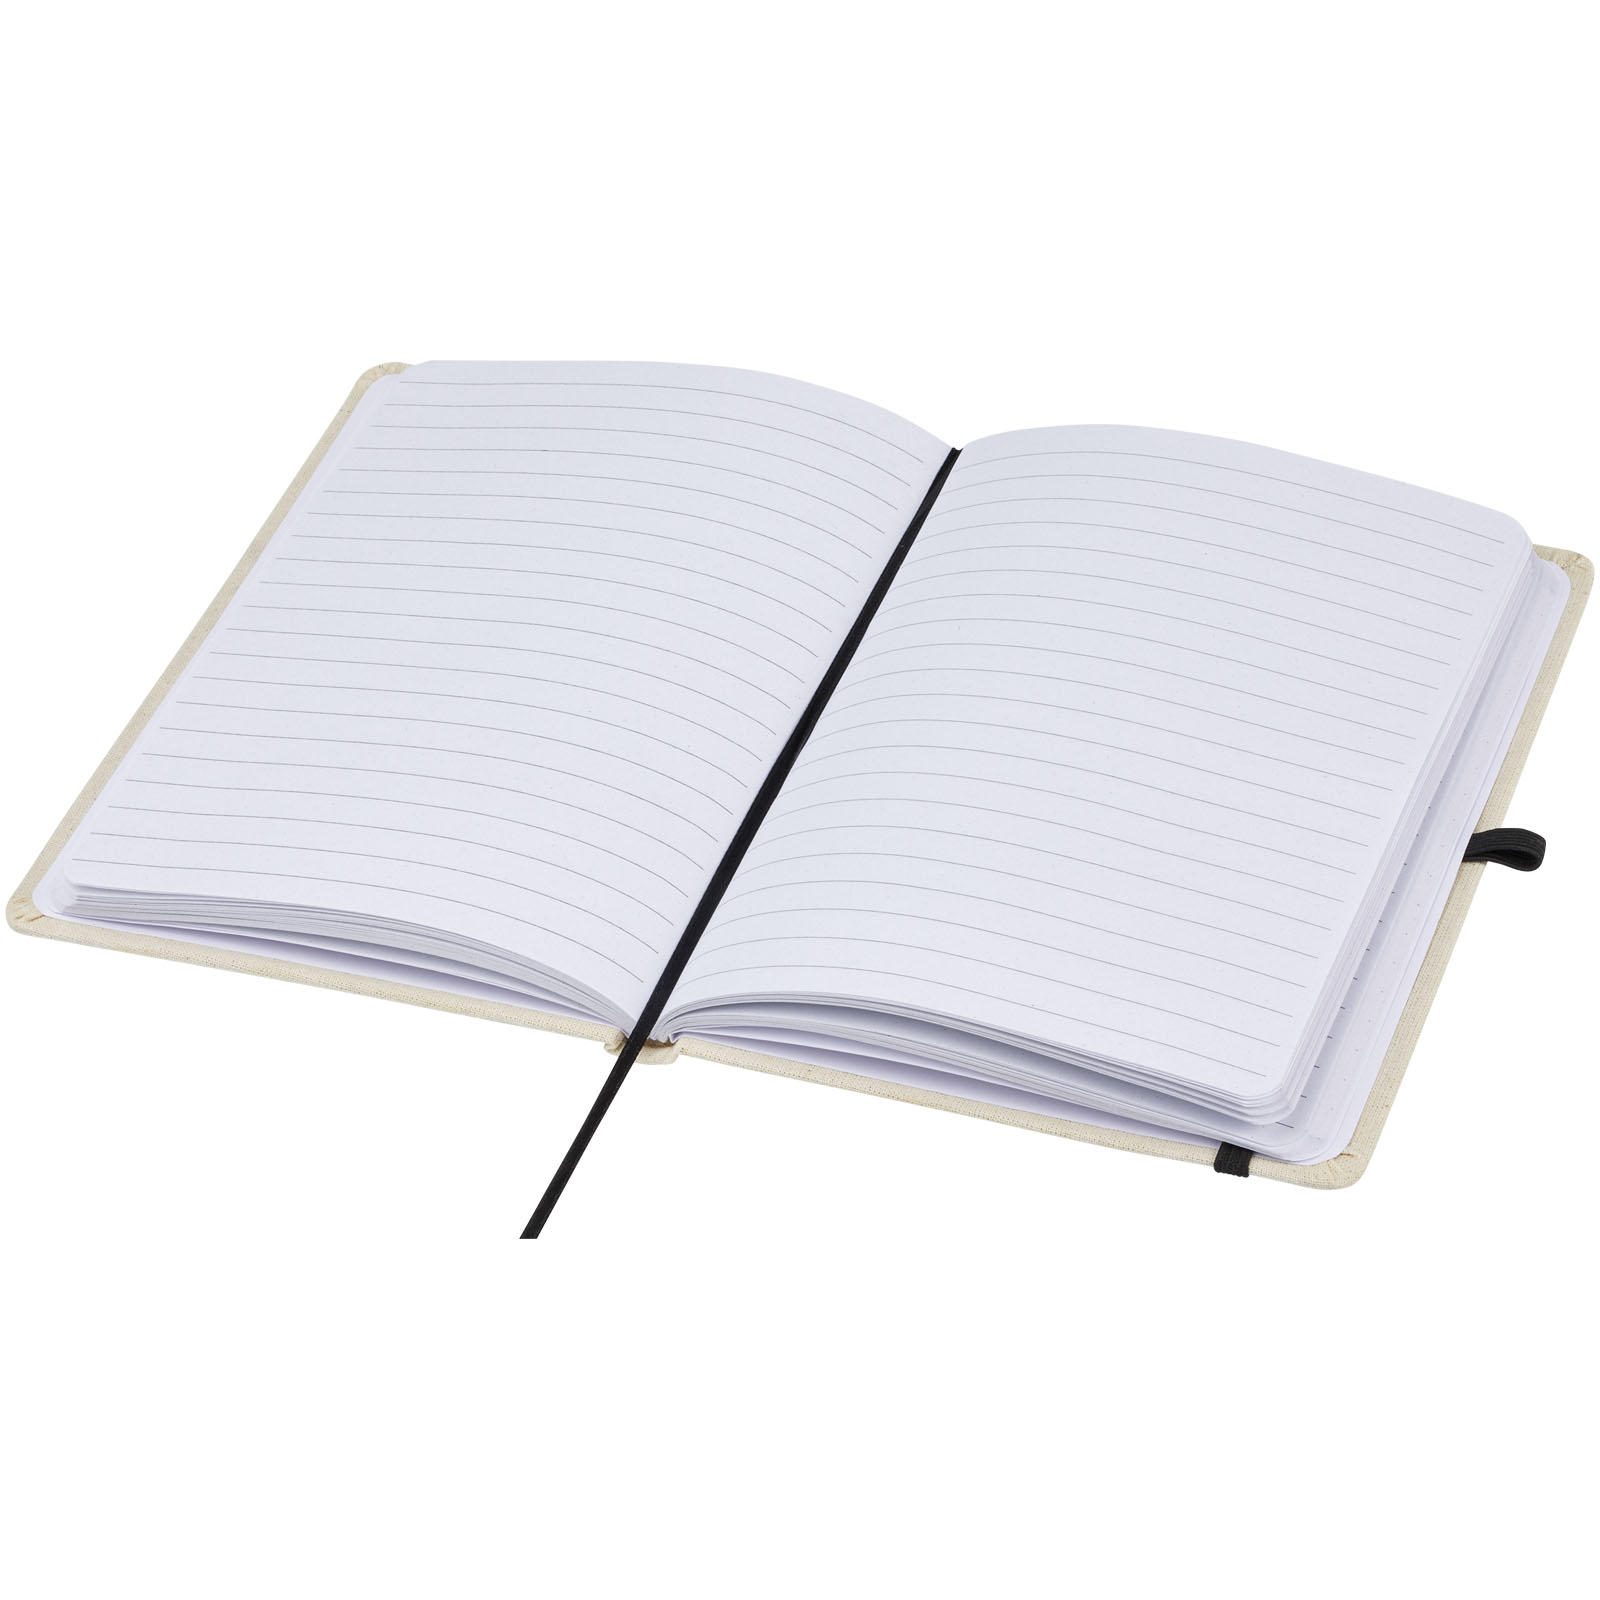 Advertising Hard cover notebooks - Tutico organic cotton hardcover notebook - 3